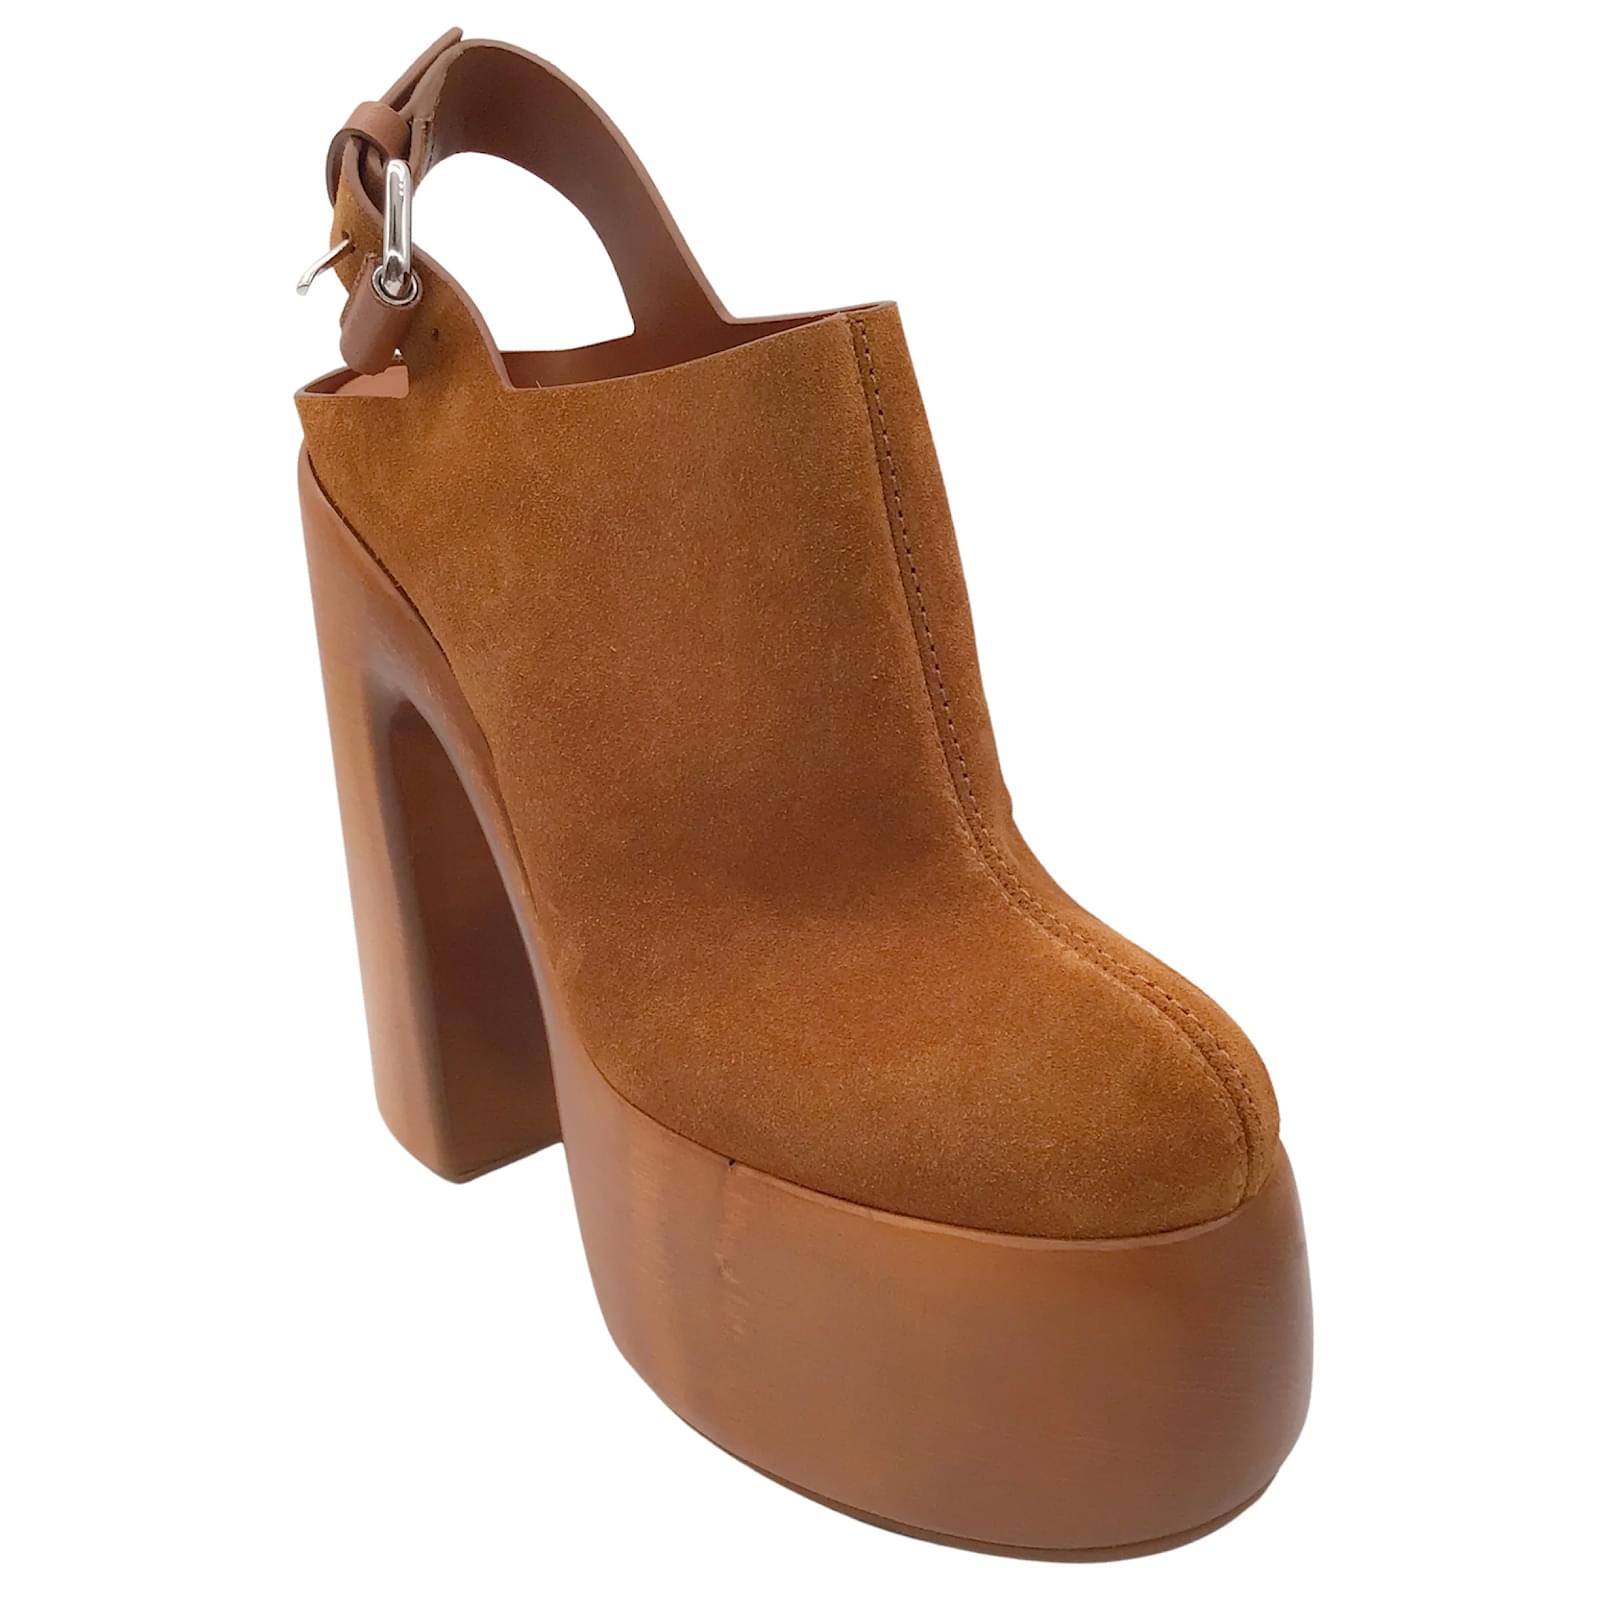 Chunky wood platform heels w a white leather... - Depop